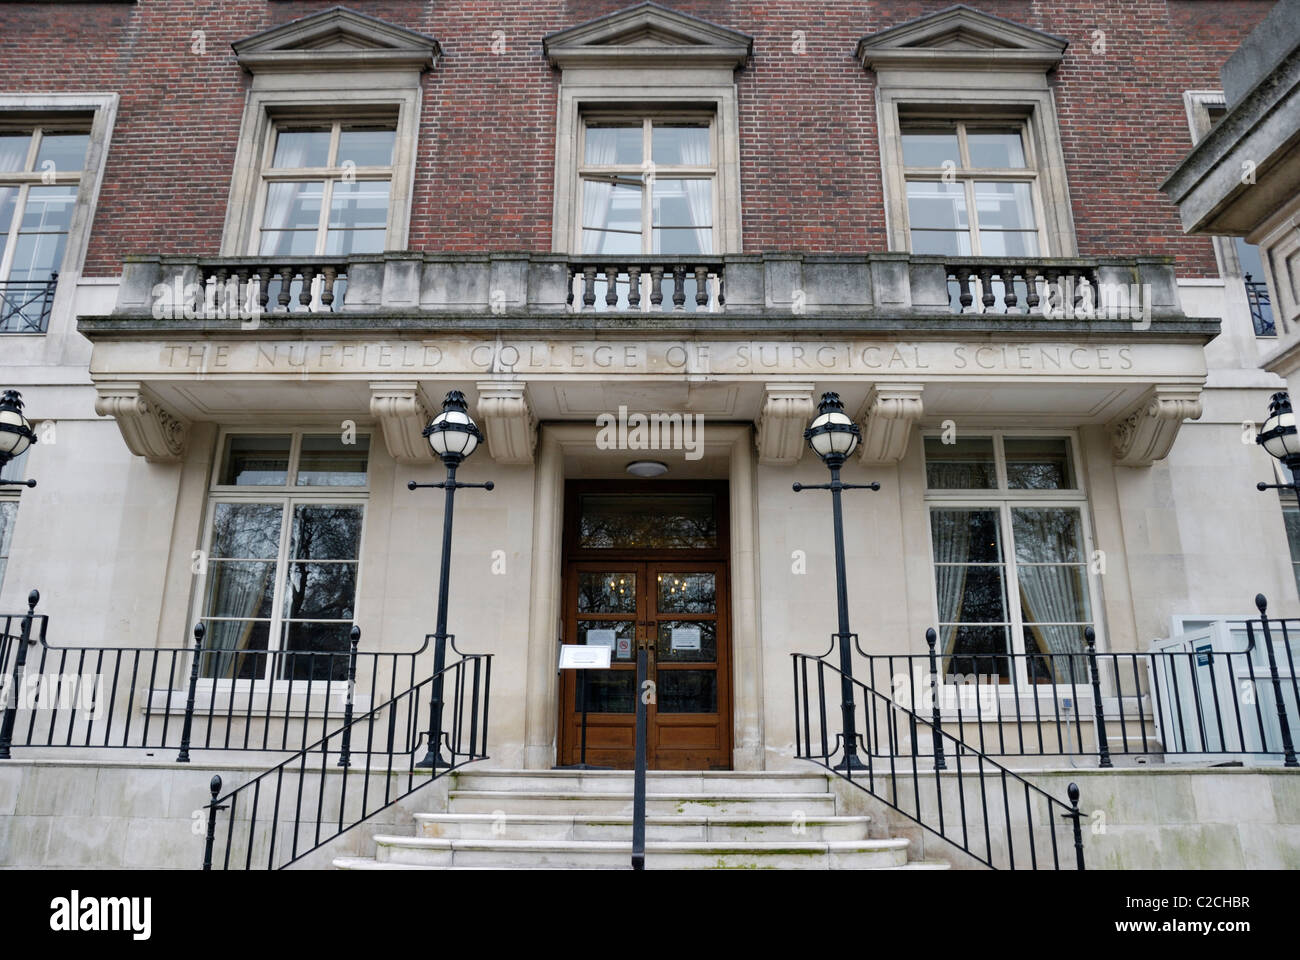 Nuffield College de Ciencias Quirúrgicas, Lincolns Inn Fields, Londres, Inglaterra Foto de stock